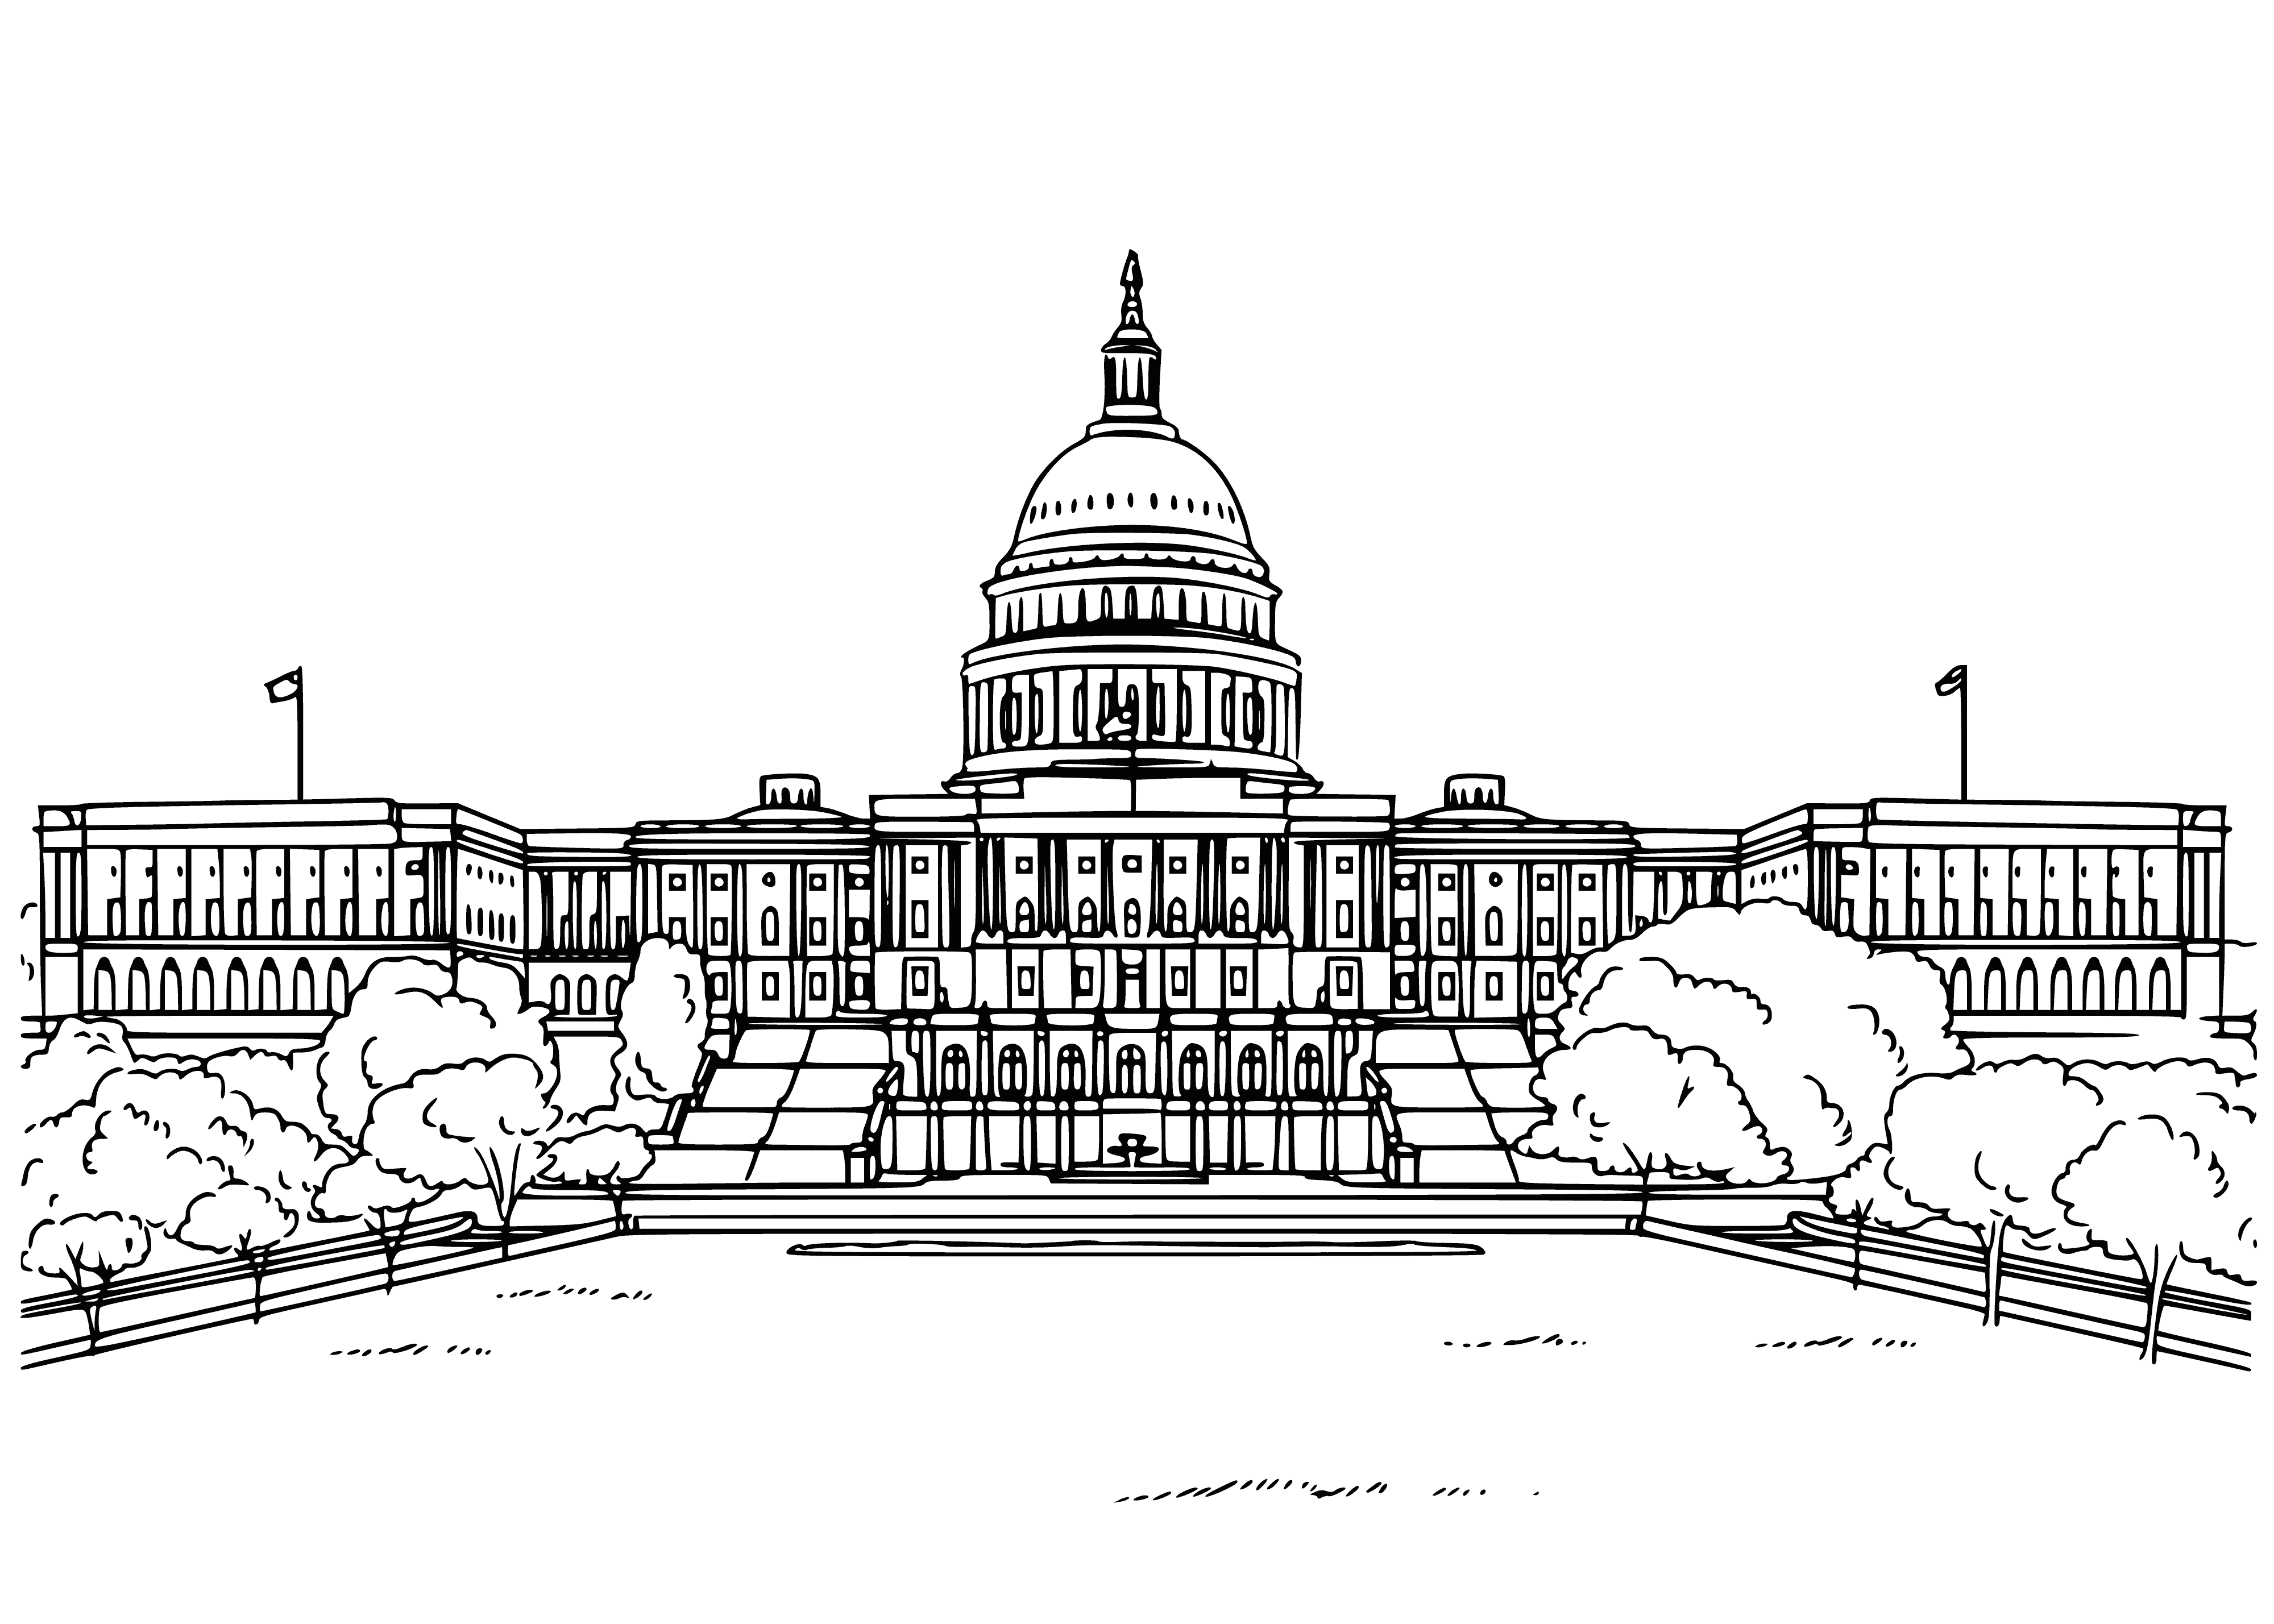 Capitol-gebou in Washington DC. VSA inkleurbladsy